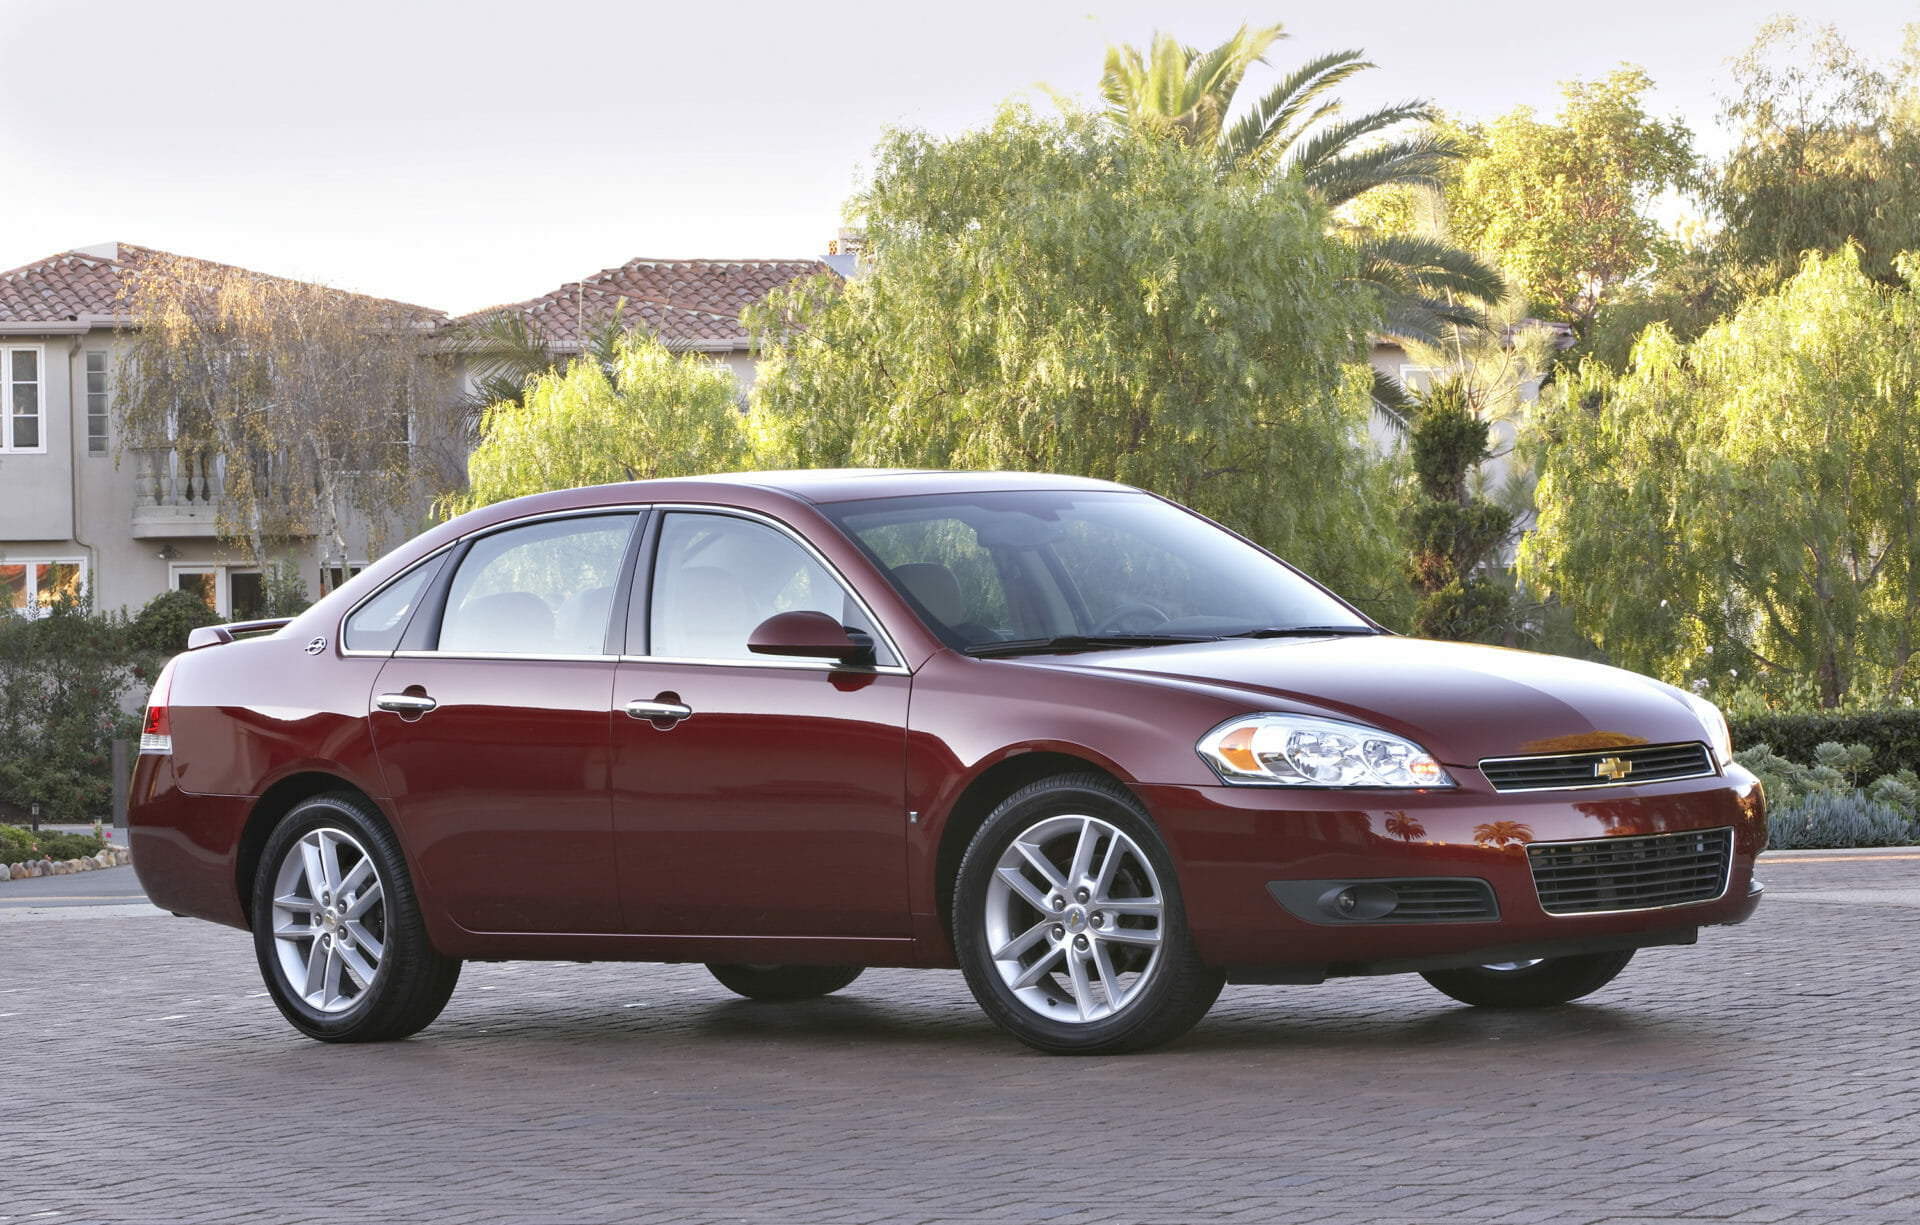 2011 Chevrolet Impala Review: An Unreliable Boring Full Size Sedan